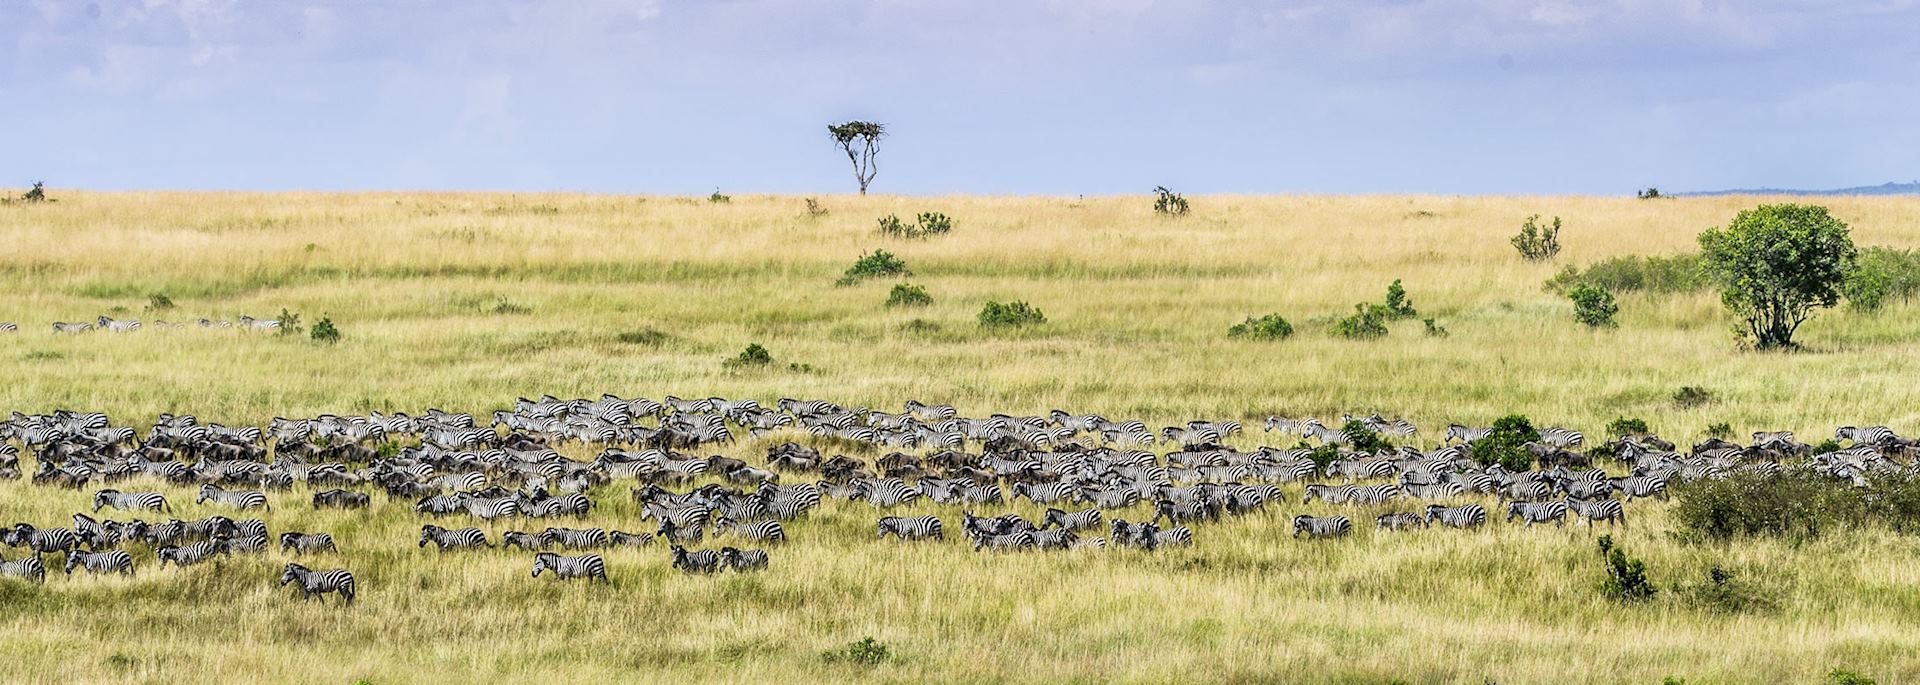 Zebra migration across the Masai Mara